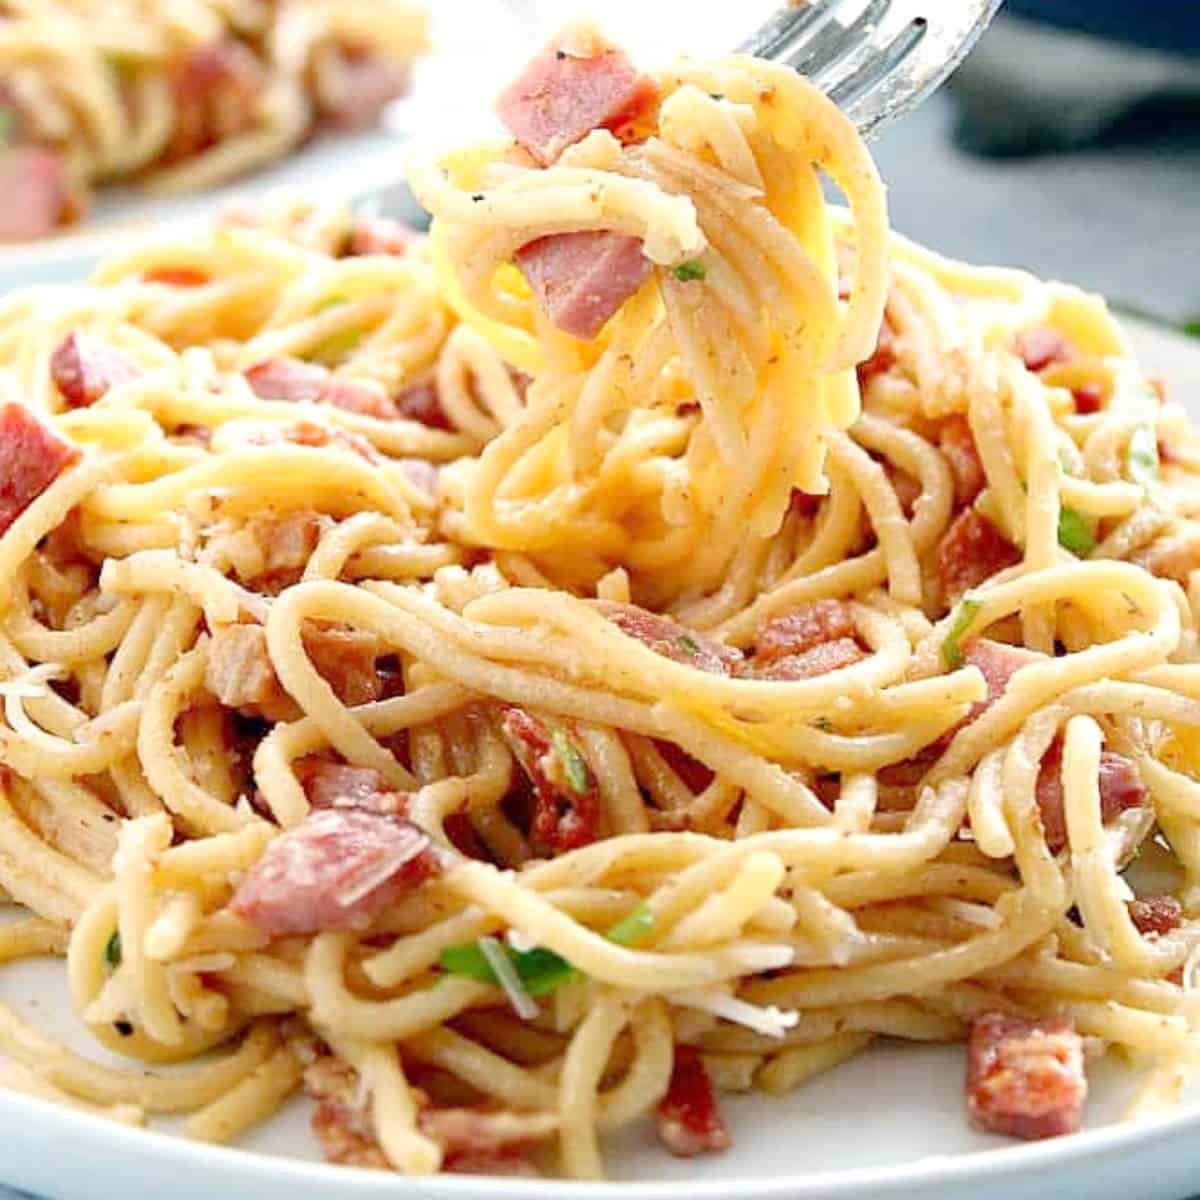 Carbonara pasta on a plate.